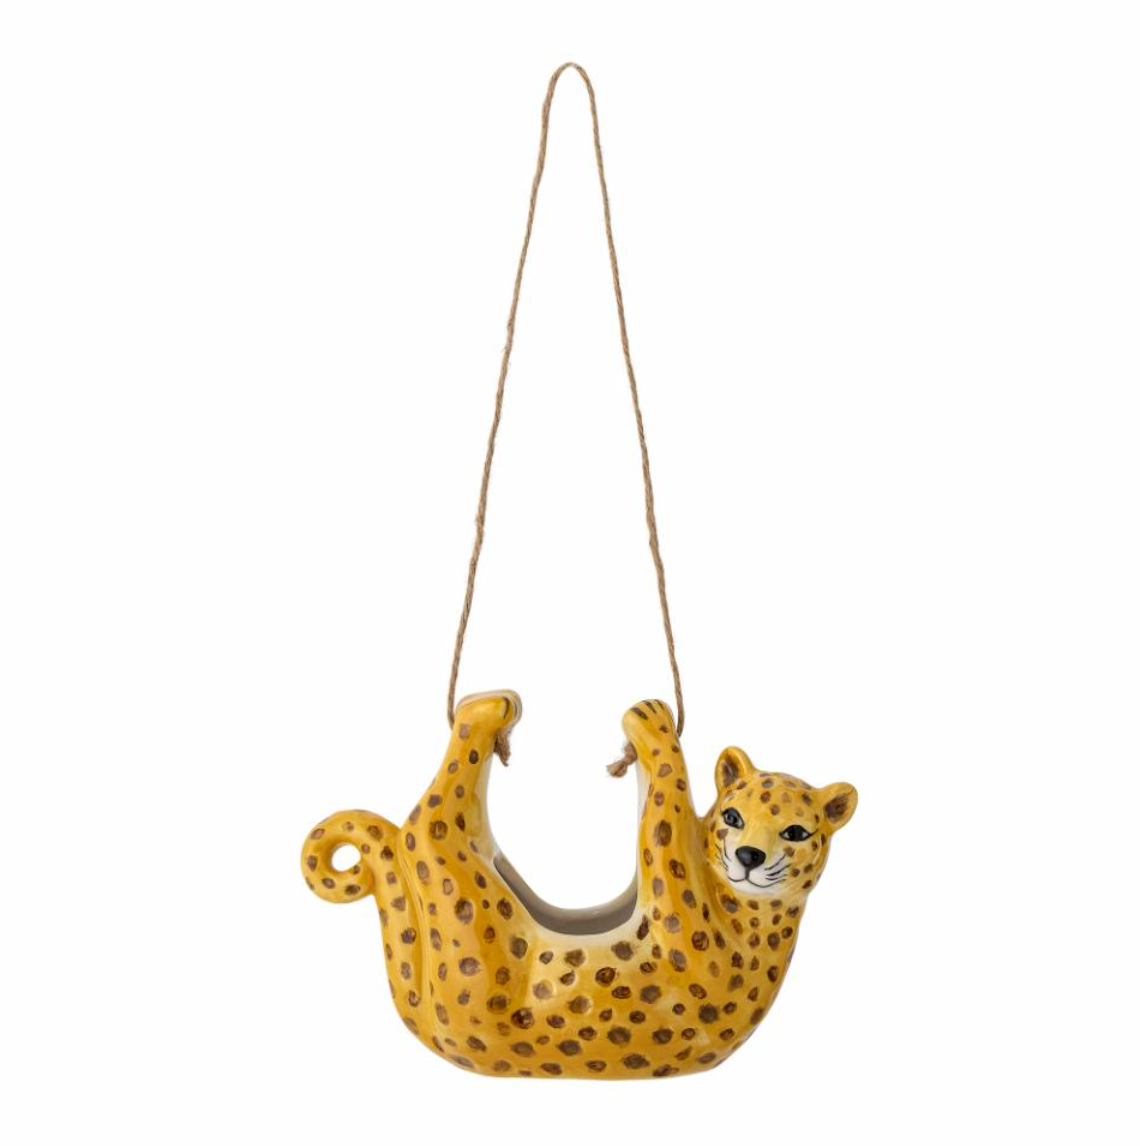 Cheeta hangpot